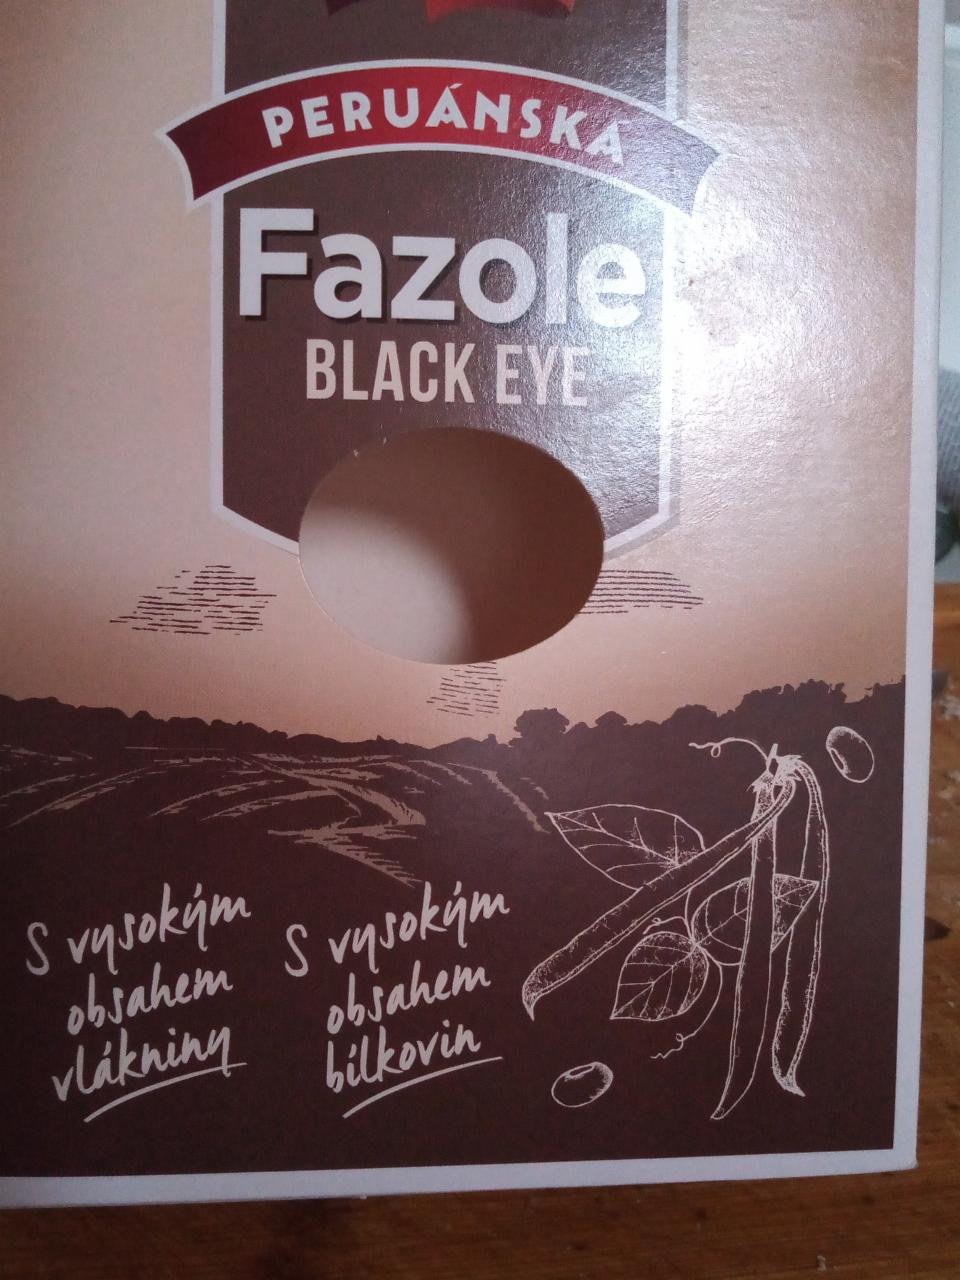 Fotografie - Peruánská Fazole Black eye Druid